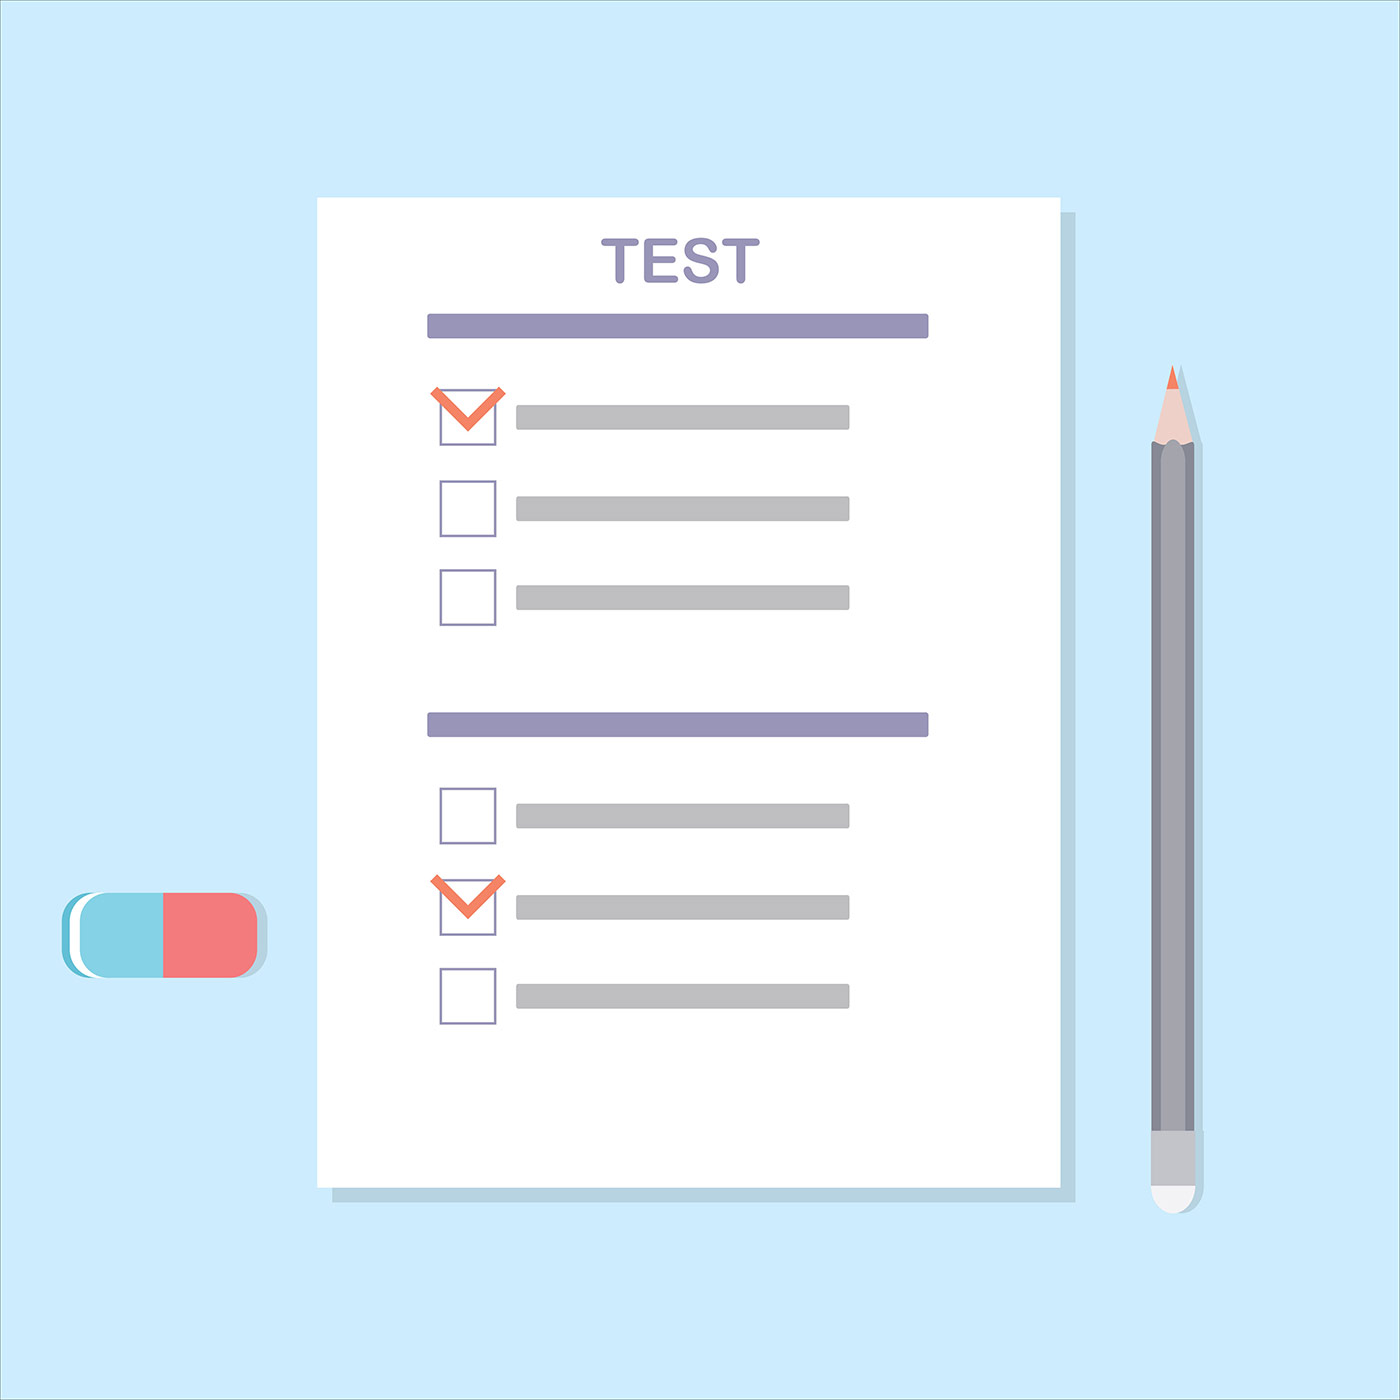 Amtsärztliche Prüfung -- Multiple-Choice Test